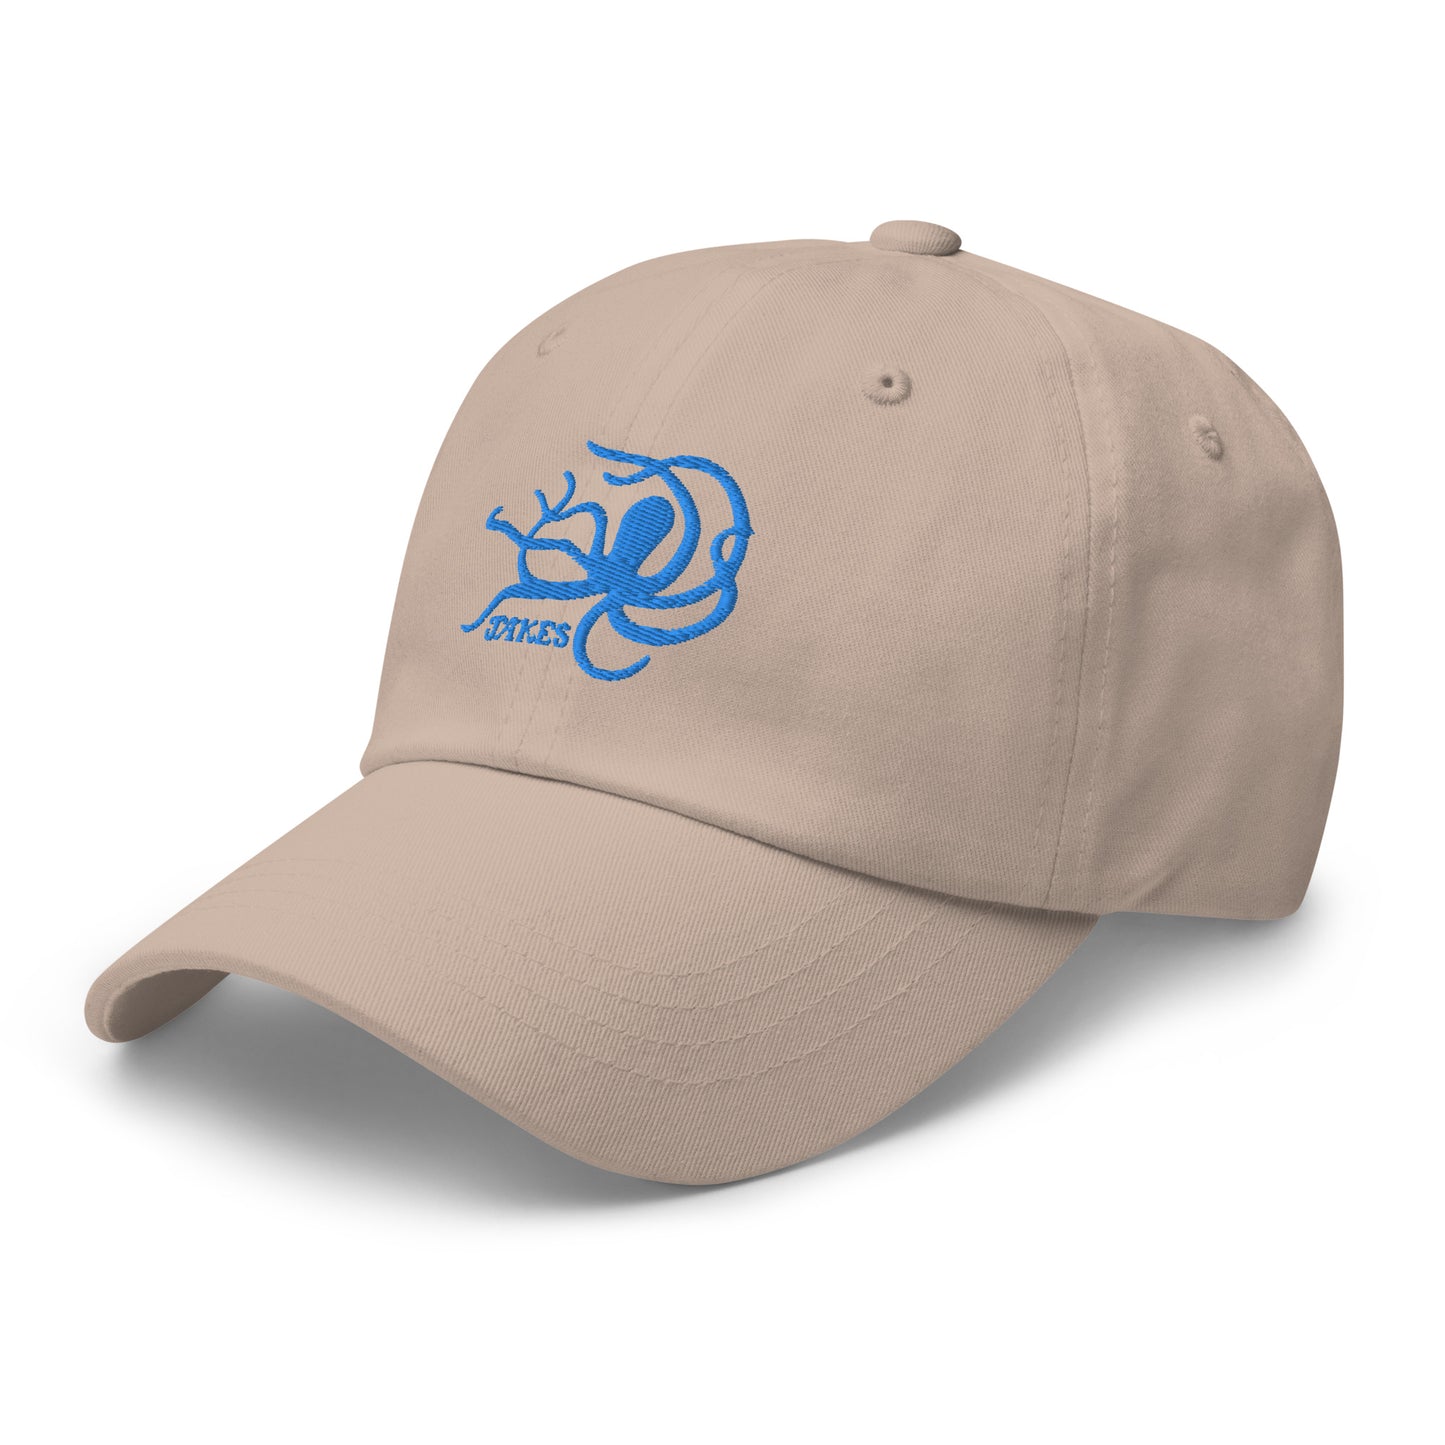 Jakes Aqua / Blue Teal Octopus Logo Baseball Cap